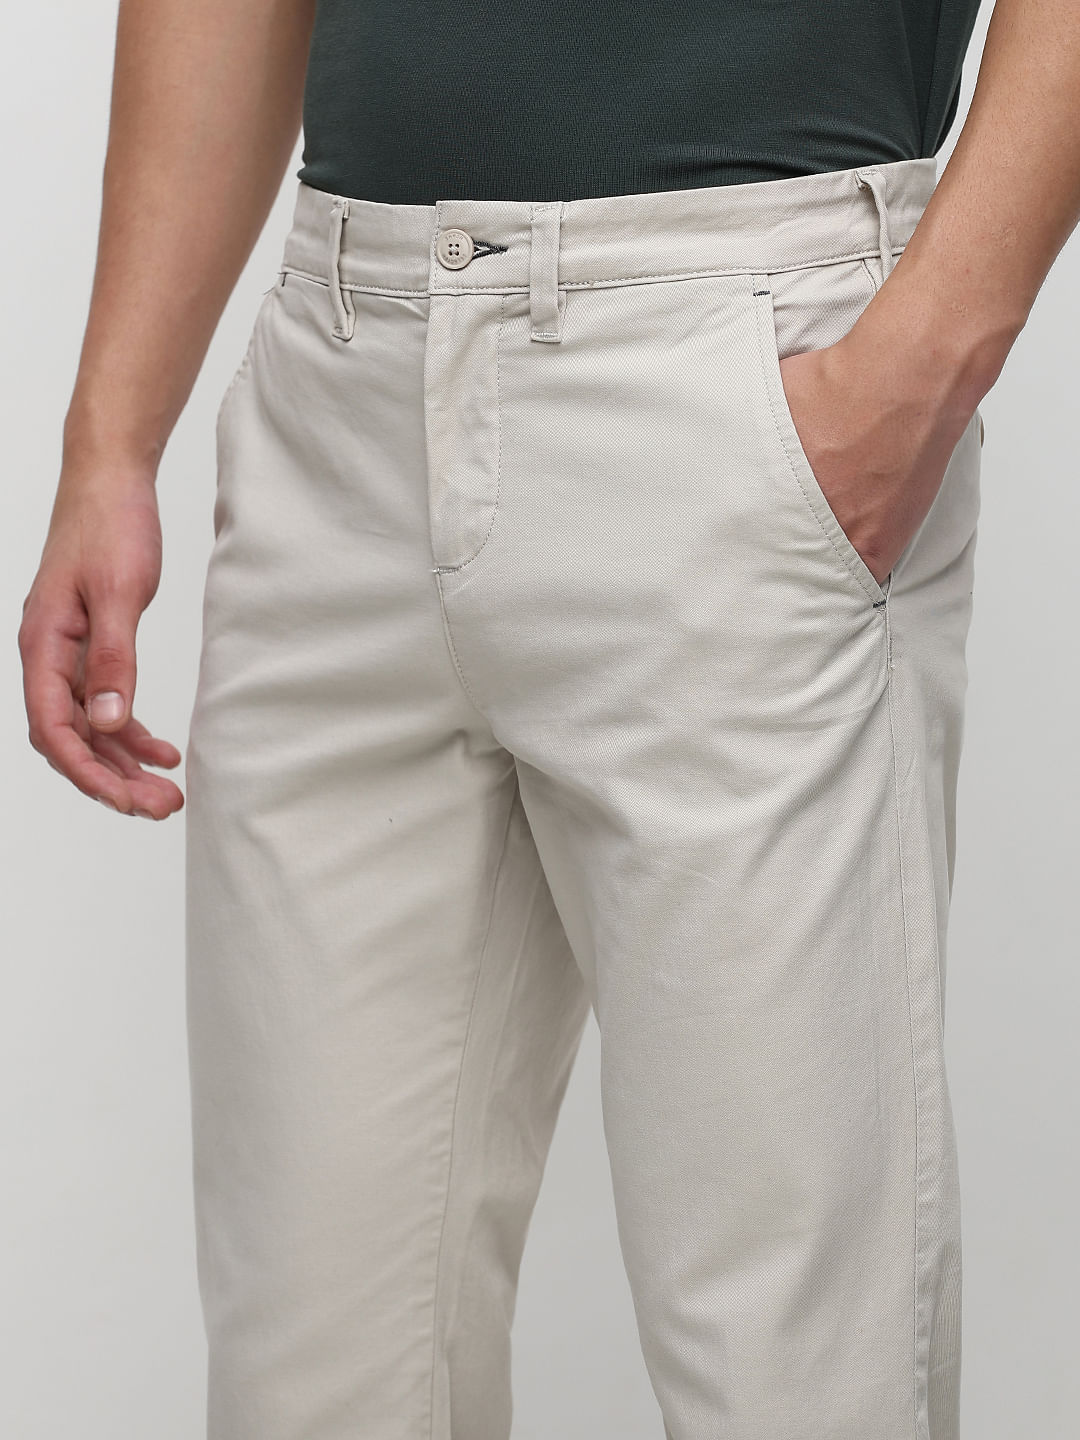 Lot 900XX - 13.5oz Slim Fit White Jeans - One Wash | James Dant